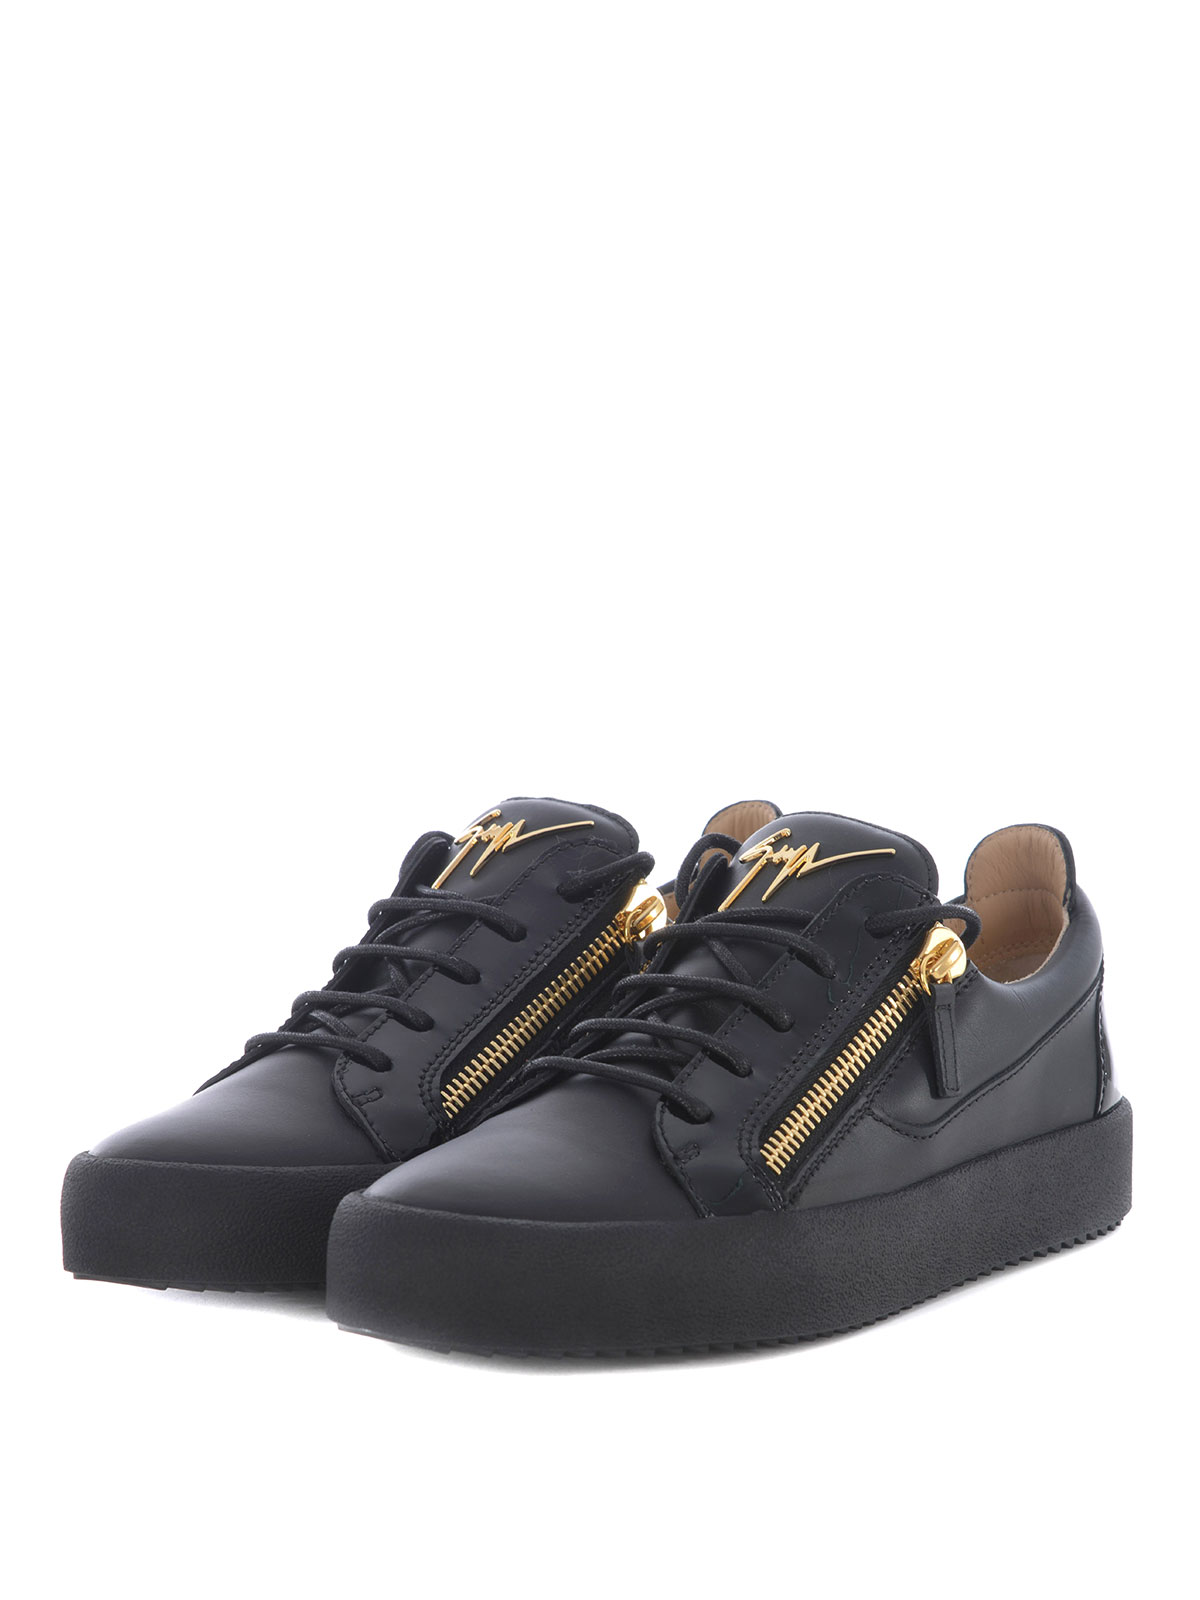 Trainers Giuseppe Zanotti - Double zip black leather sneakers - RU70000002